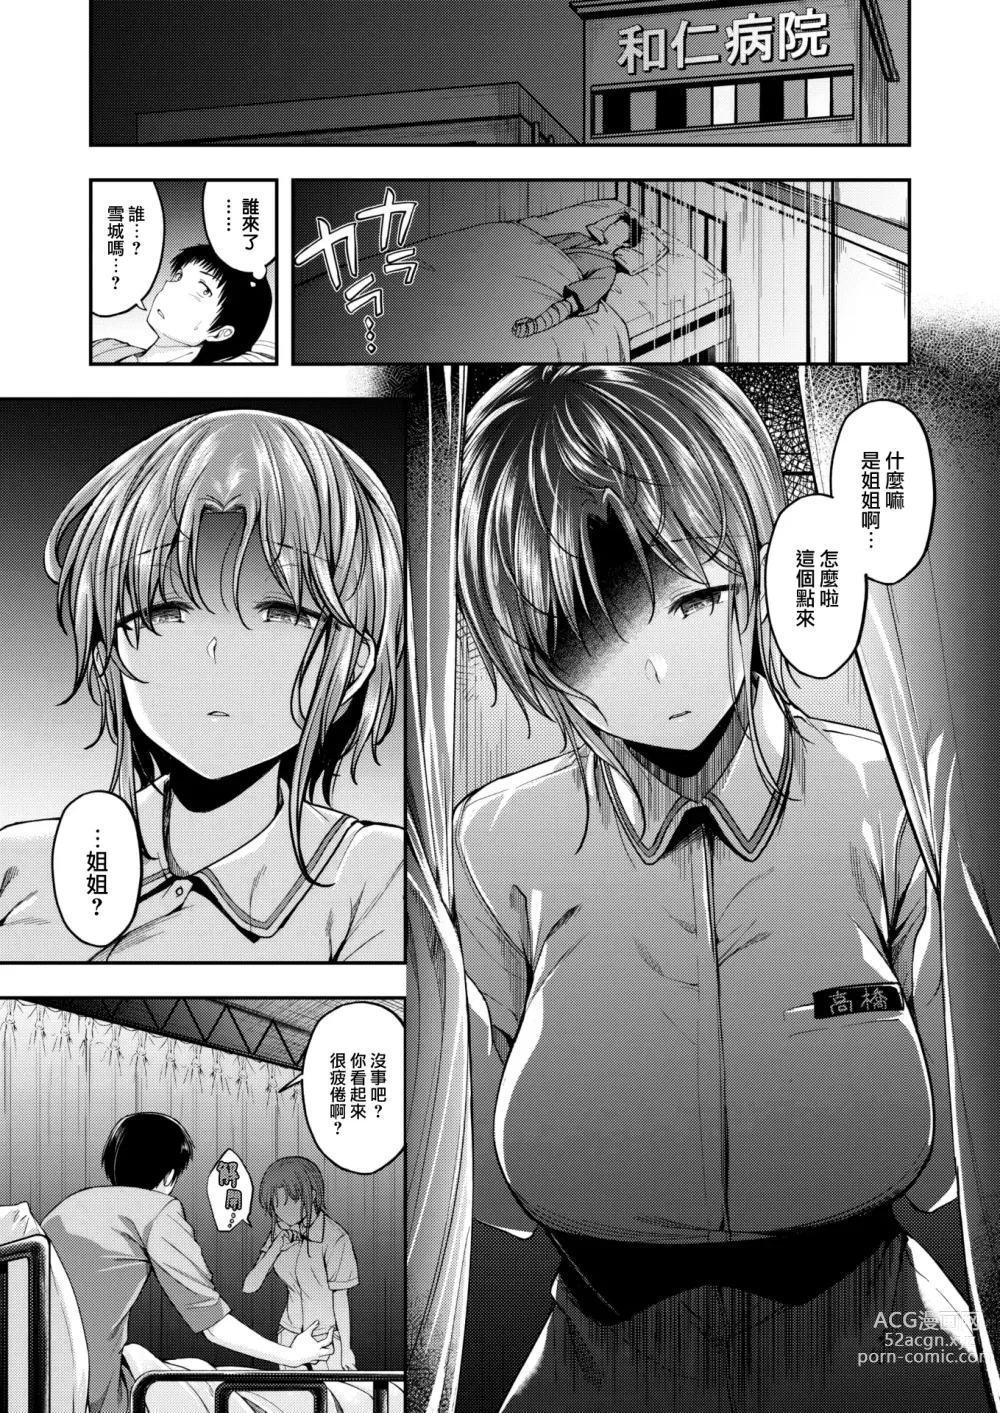 Page 7 of manga Nurse call wa fuyodesu #02